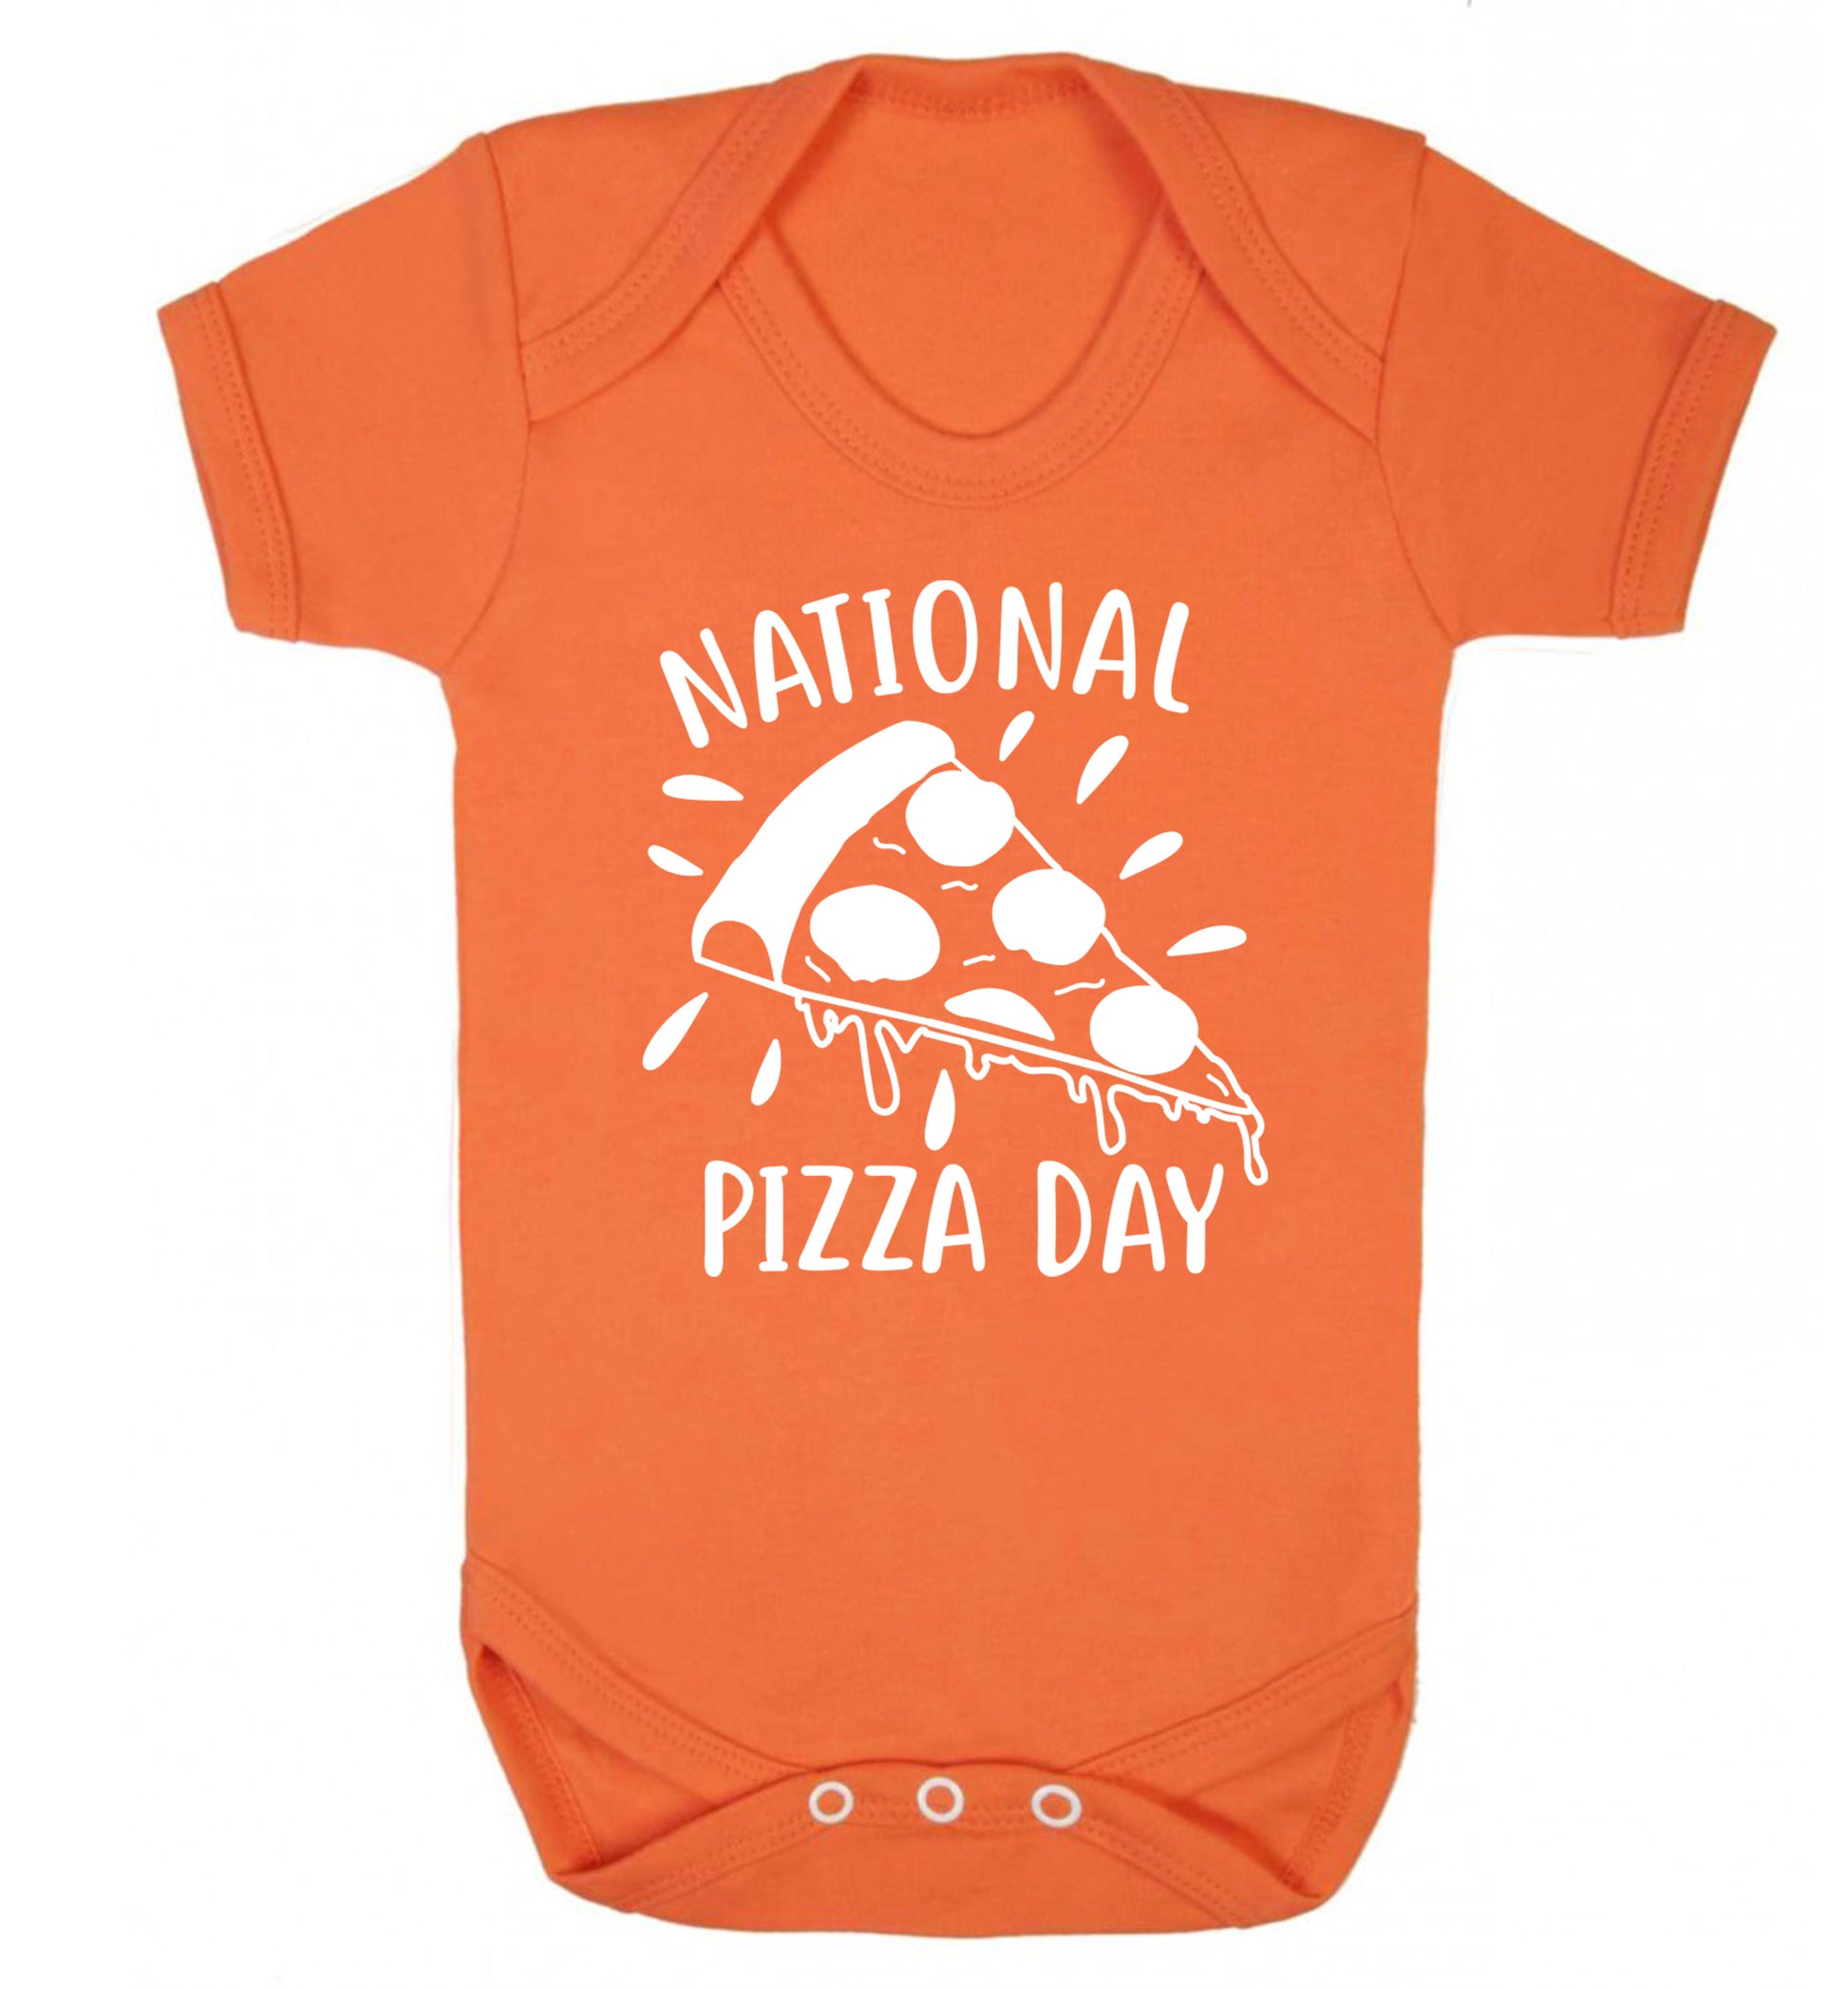 National pizza day Baby Vest orange 18-24 months